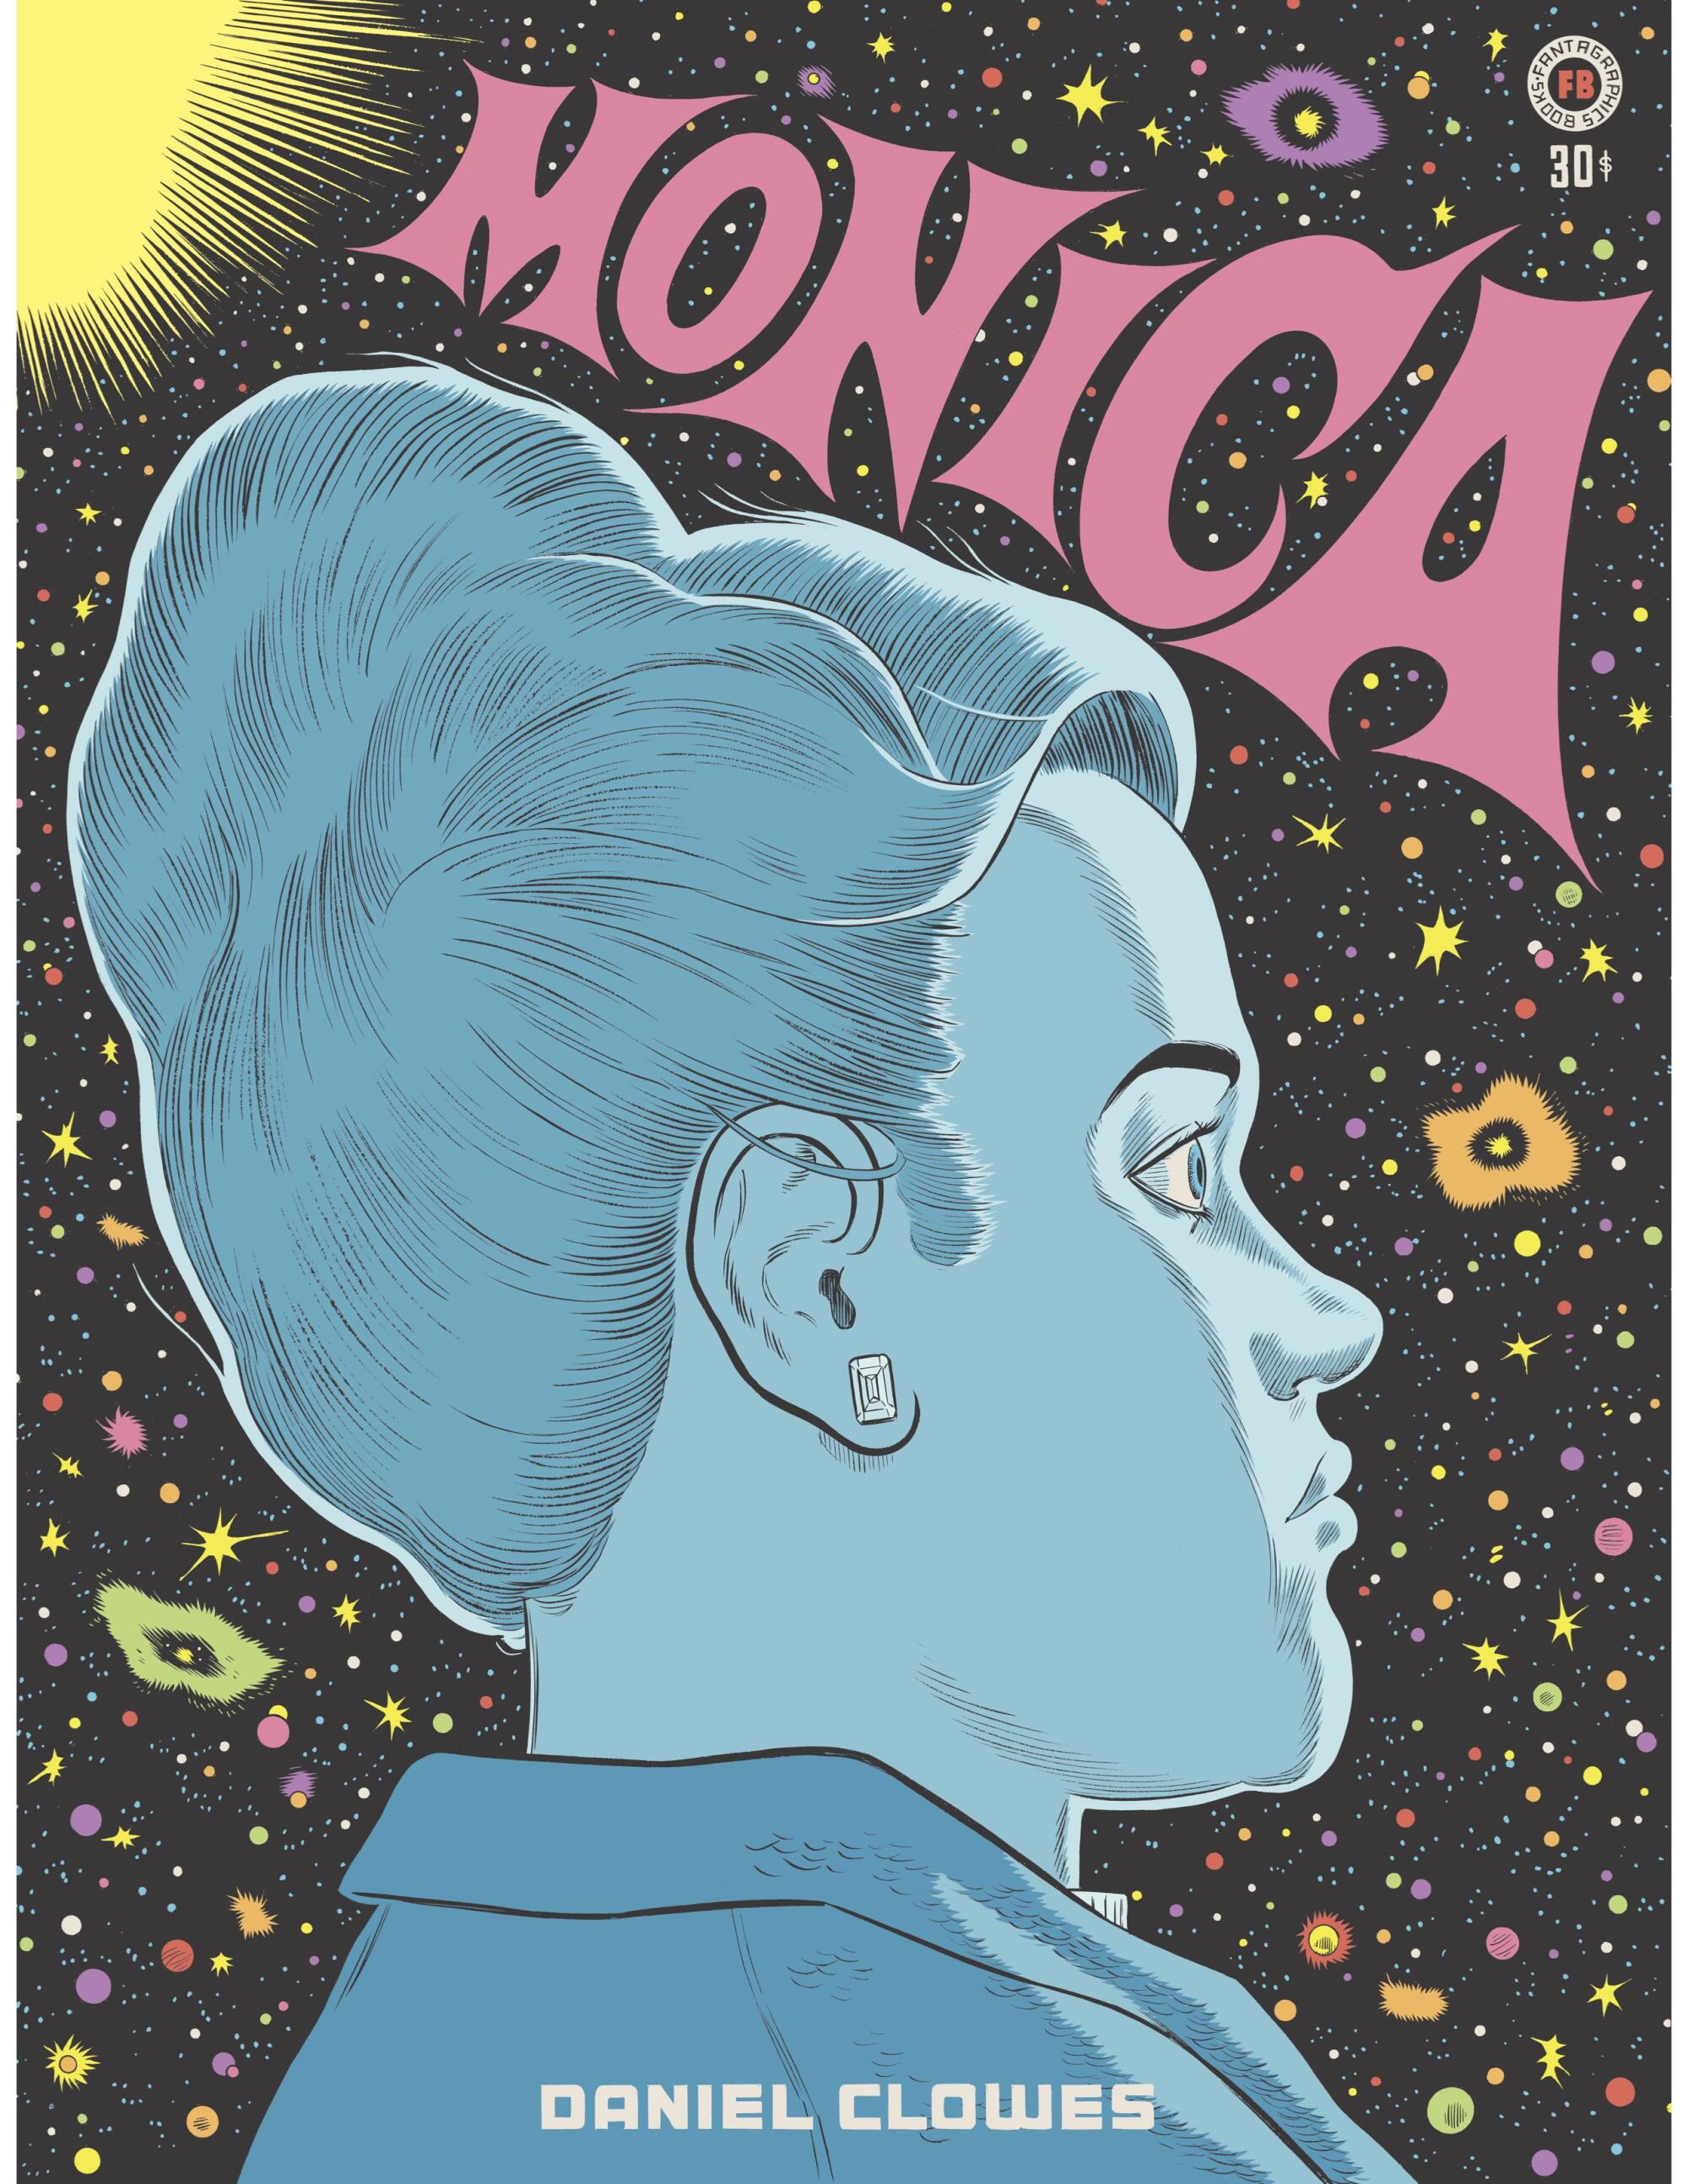 "Monica," by Daniel Clowes